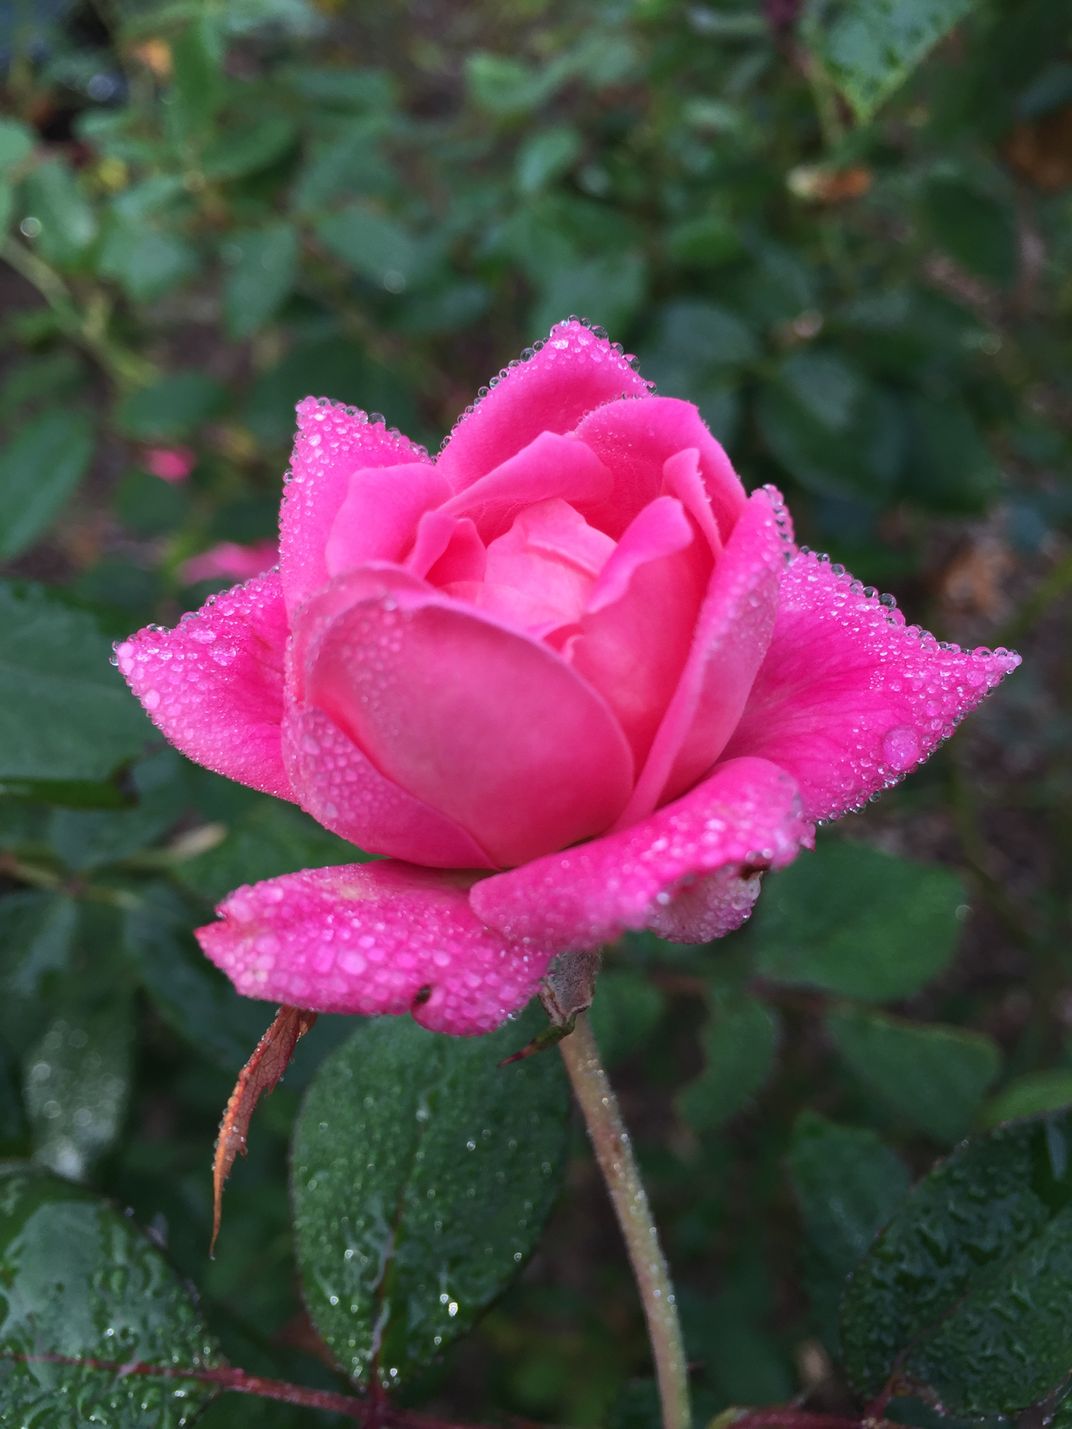 Morning dew on rose | Smithsonian Photo Contest | Smithsonian Magazine